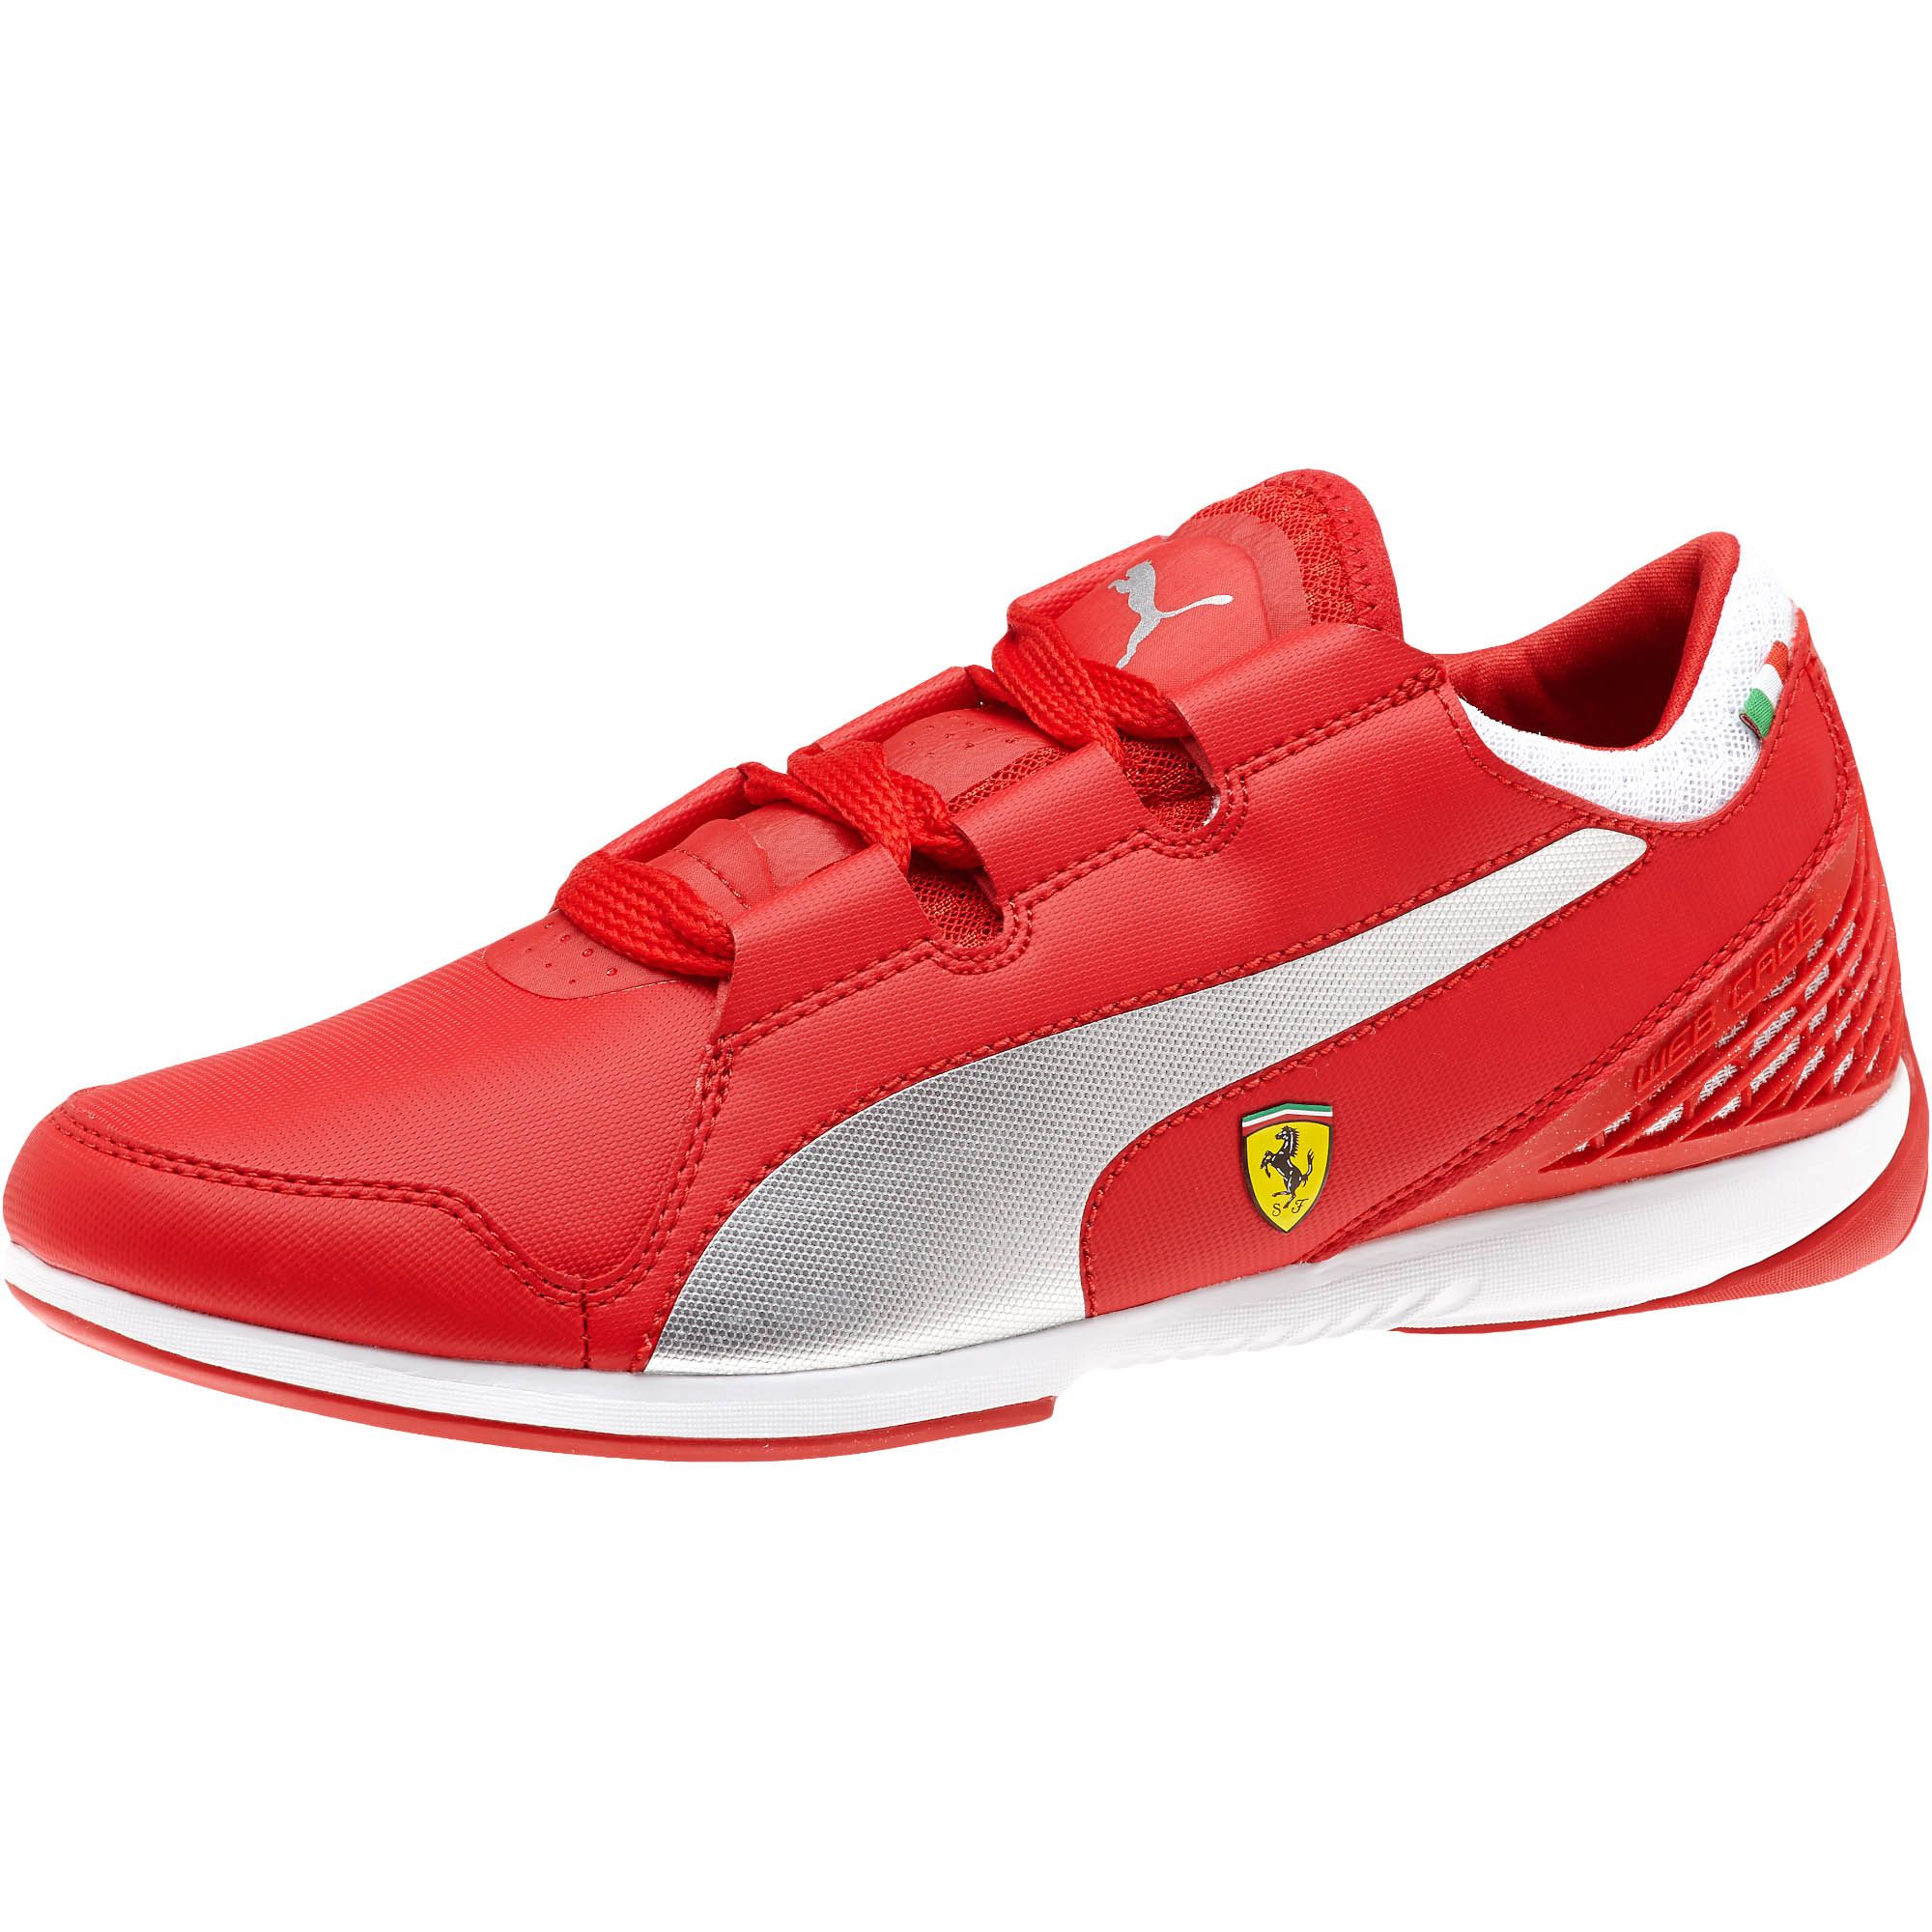 Puma Valorosso Ferrari WebCage red  304945-01